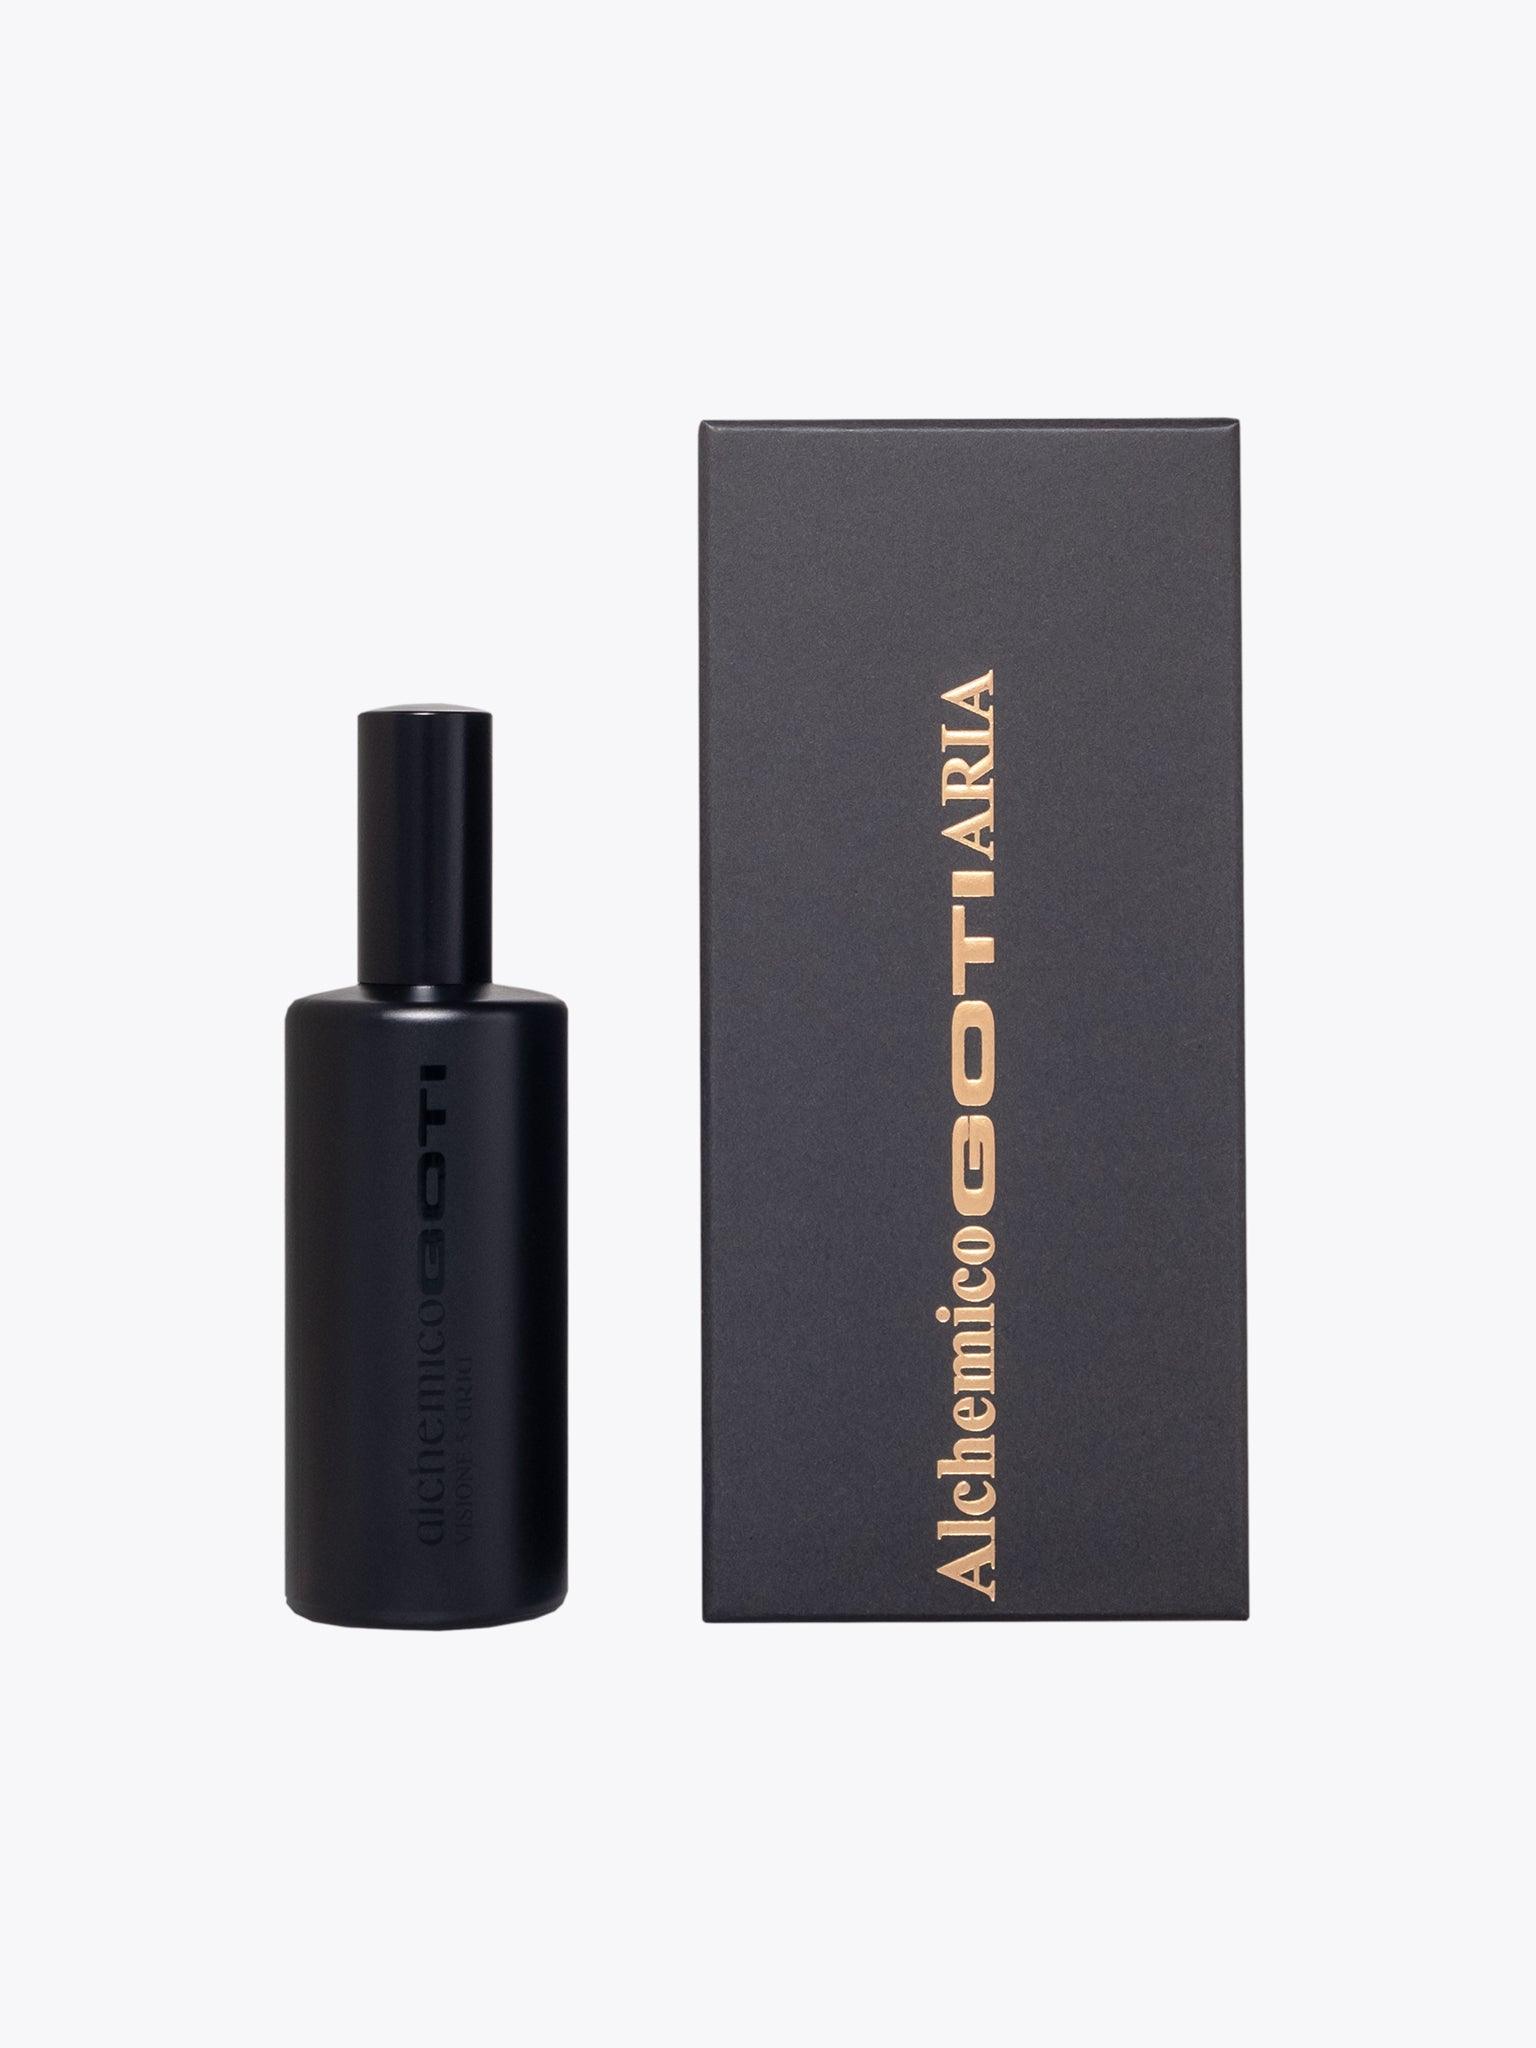 GOTI Aria Alchemico Visione 5 Perfume 100 ml